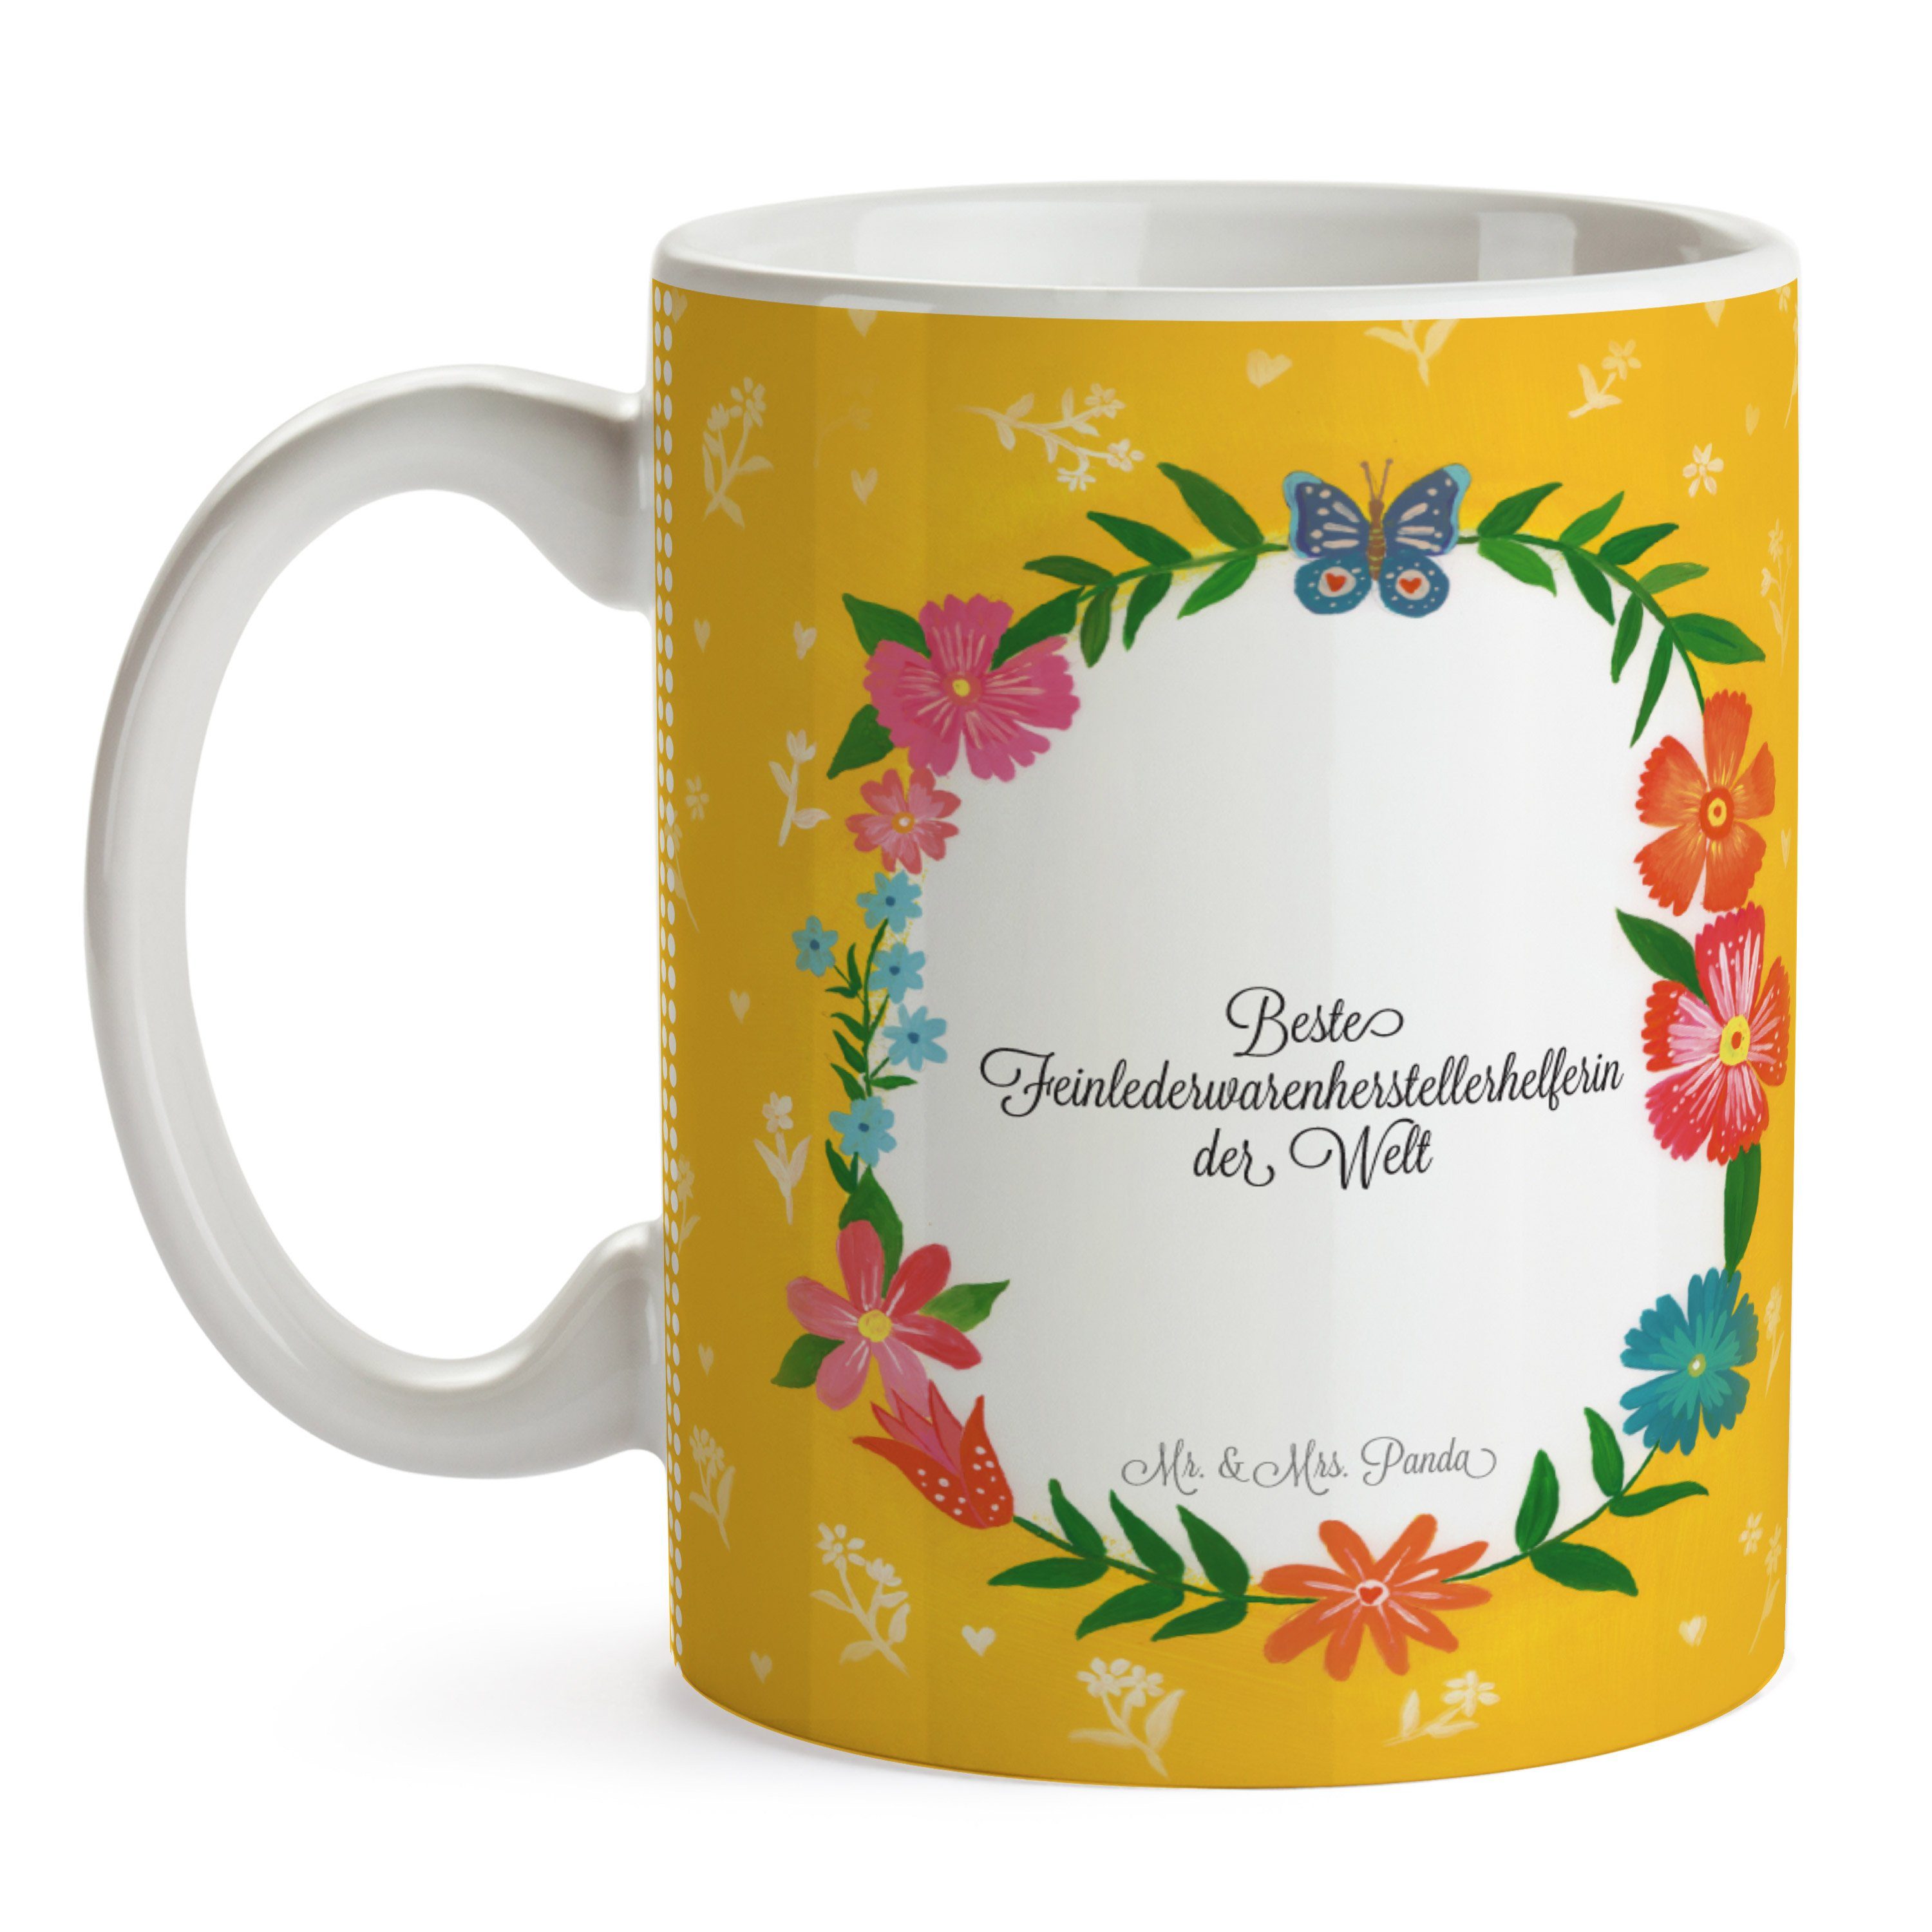 Mr. & Mrs. Panda Tasse Kaffeebecher, - Feinlederwarenherstellerhelferin Bür, Geschenk, Keramik Tasse